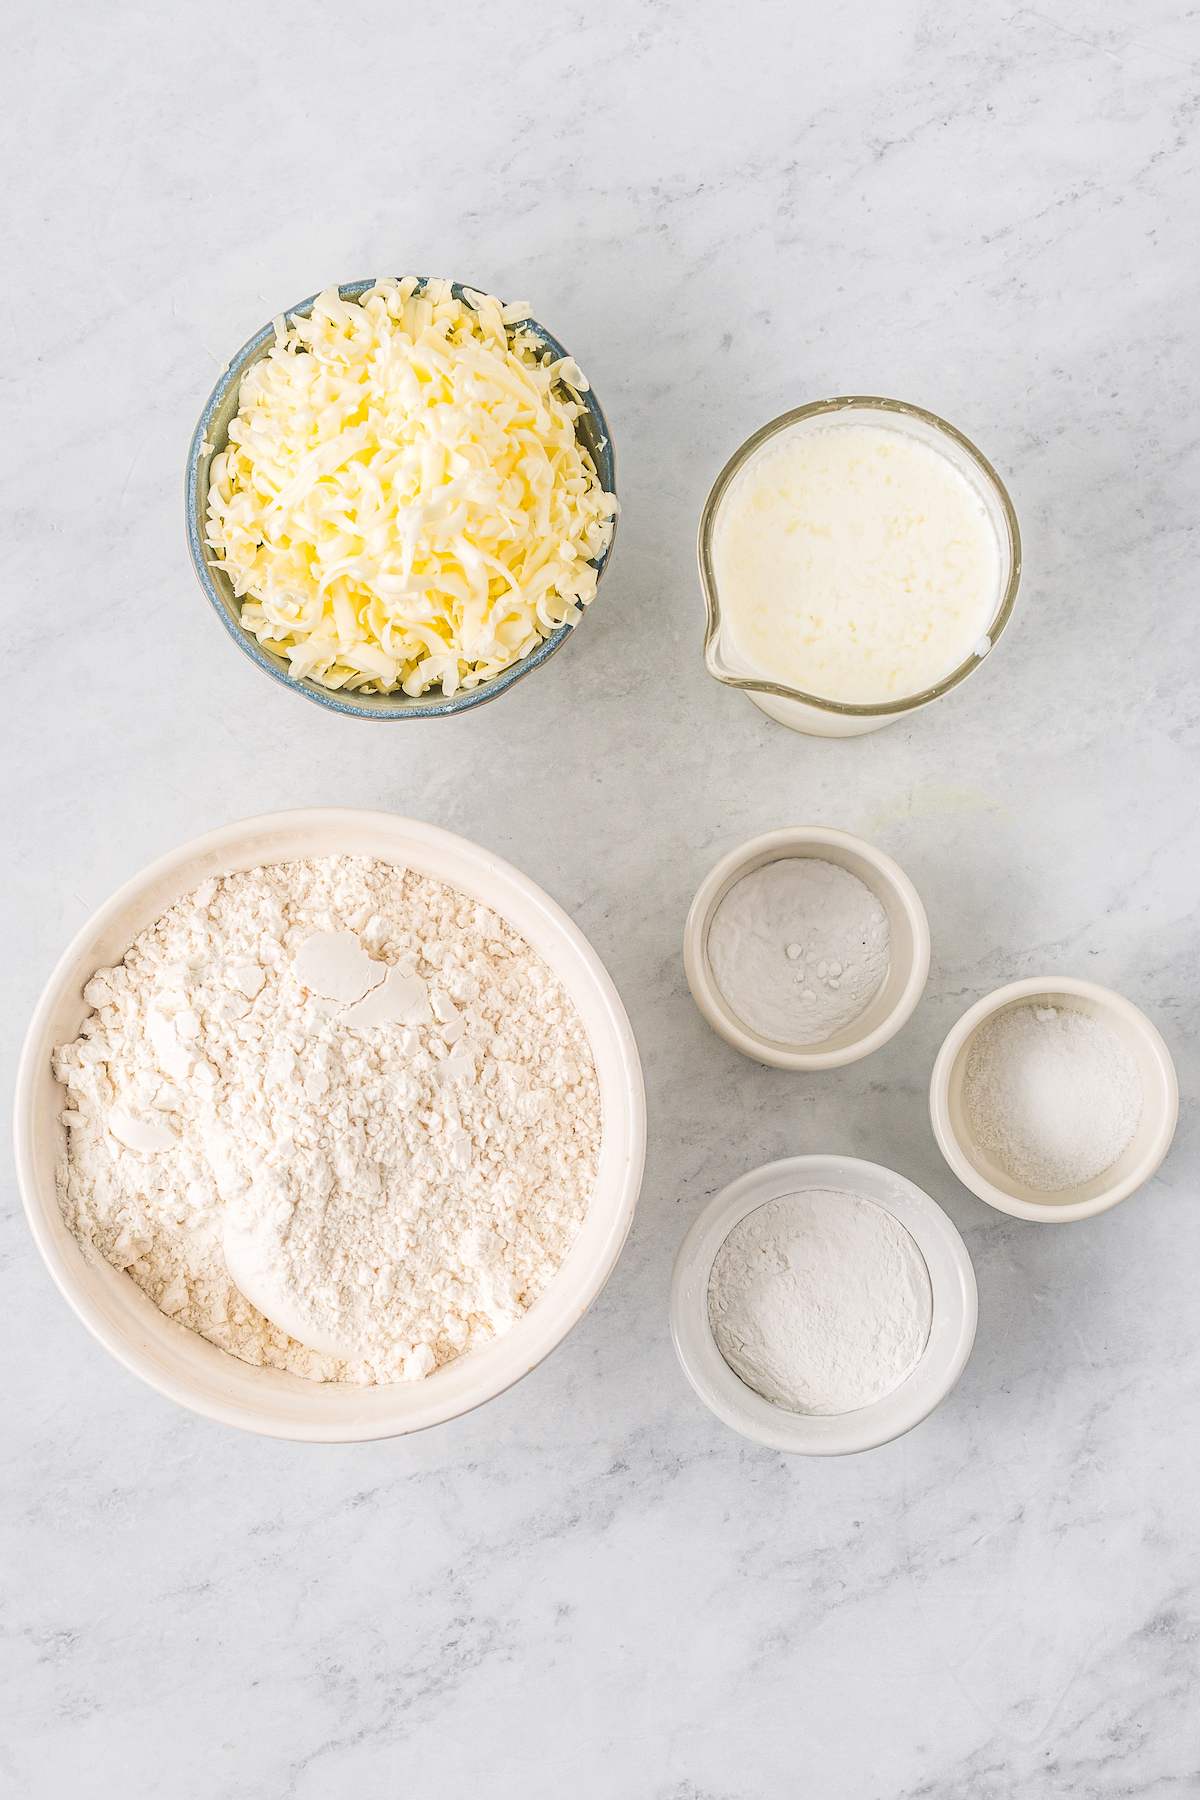 From top: Grated butter and shortening, buttermilk, flour, baking powder, baking soda, and salt.